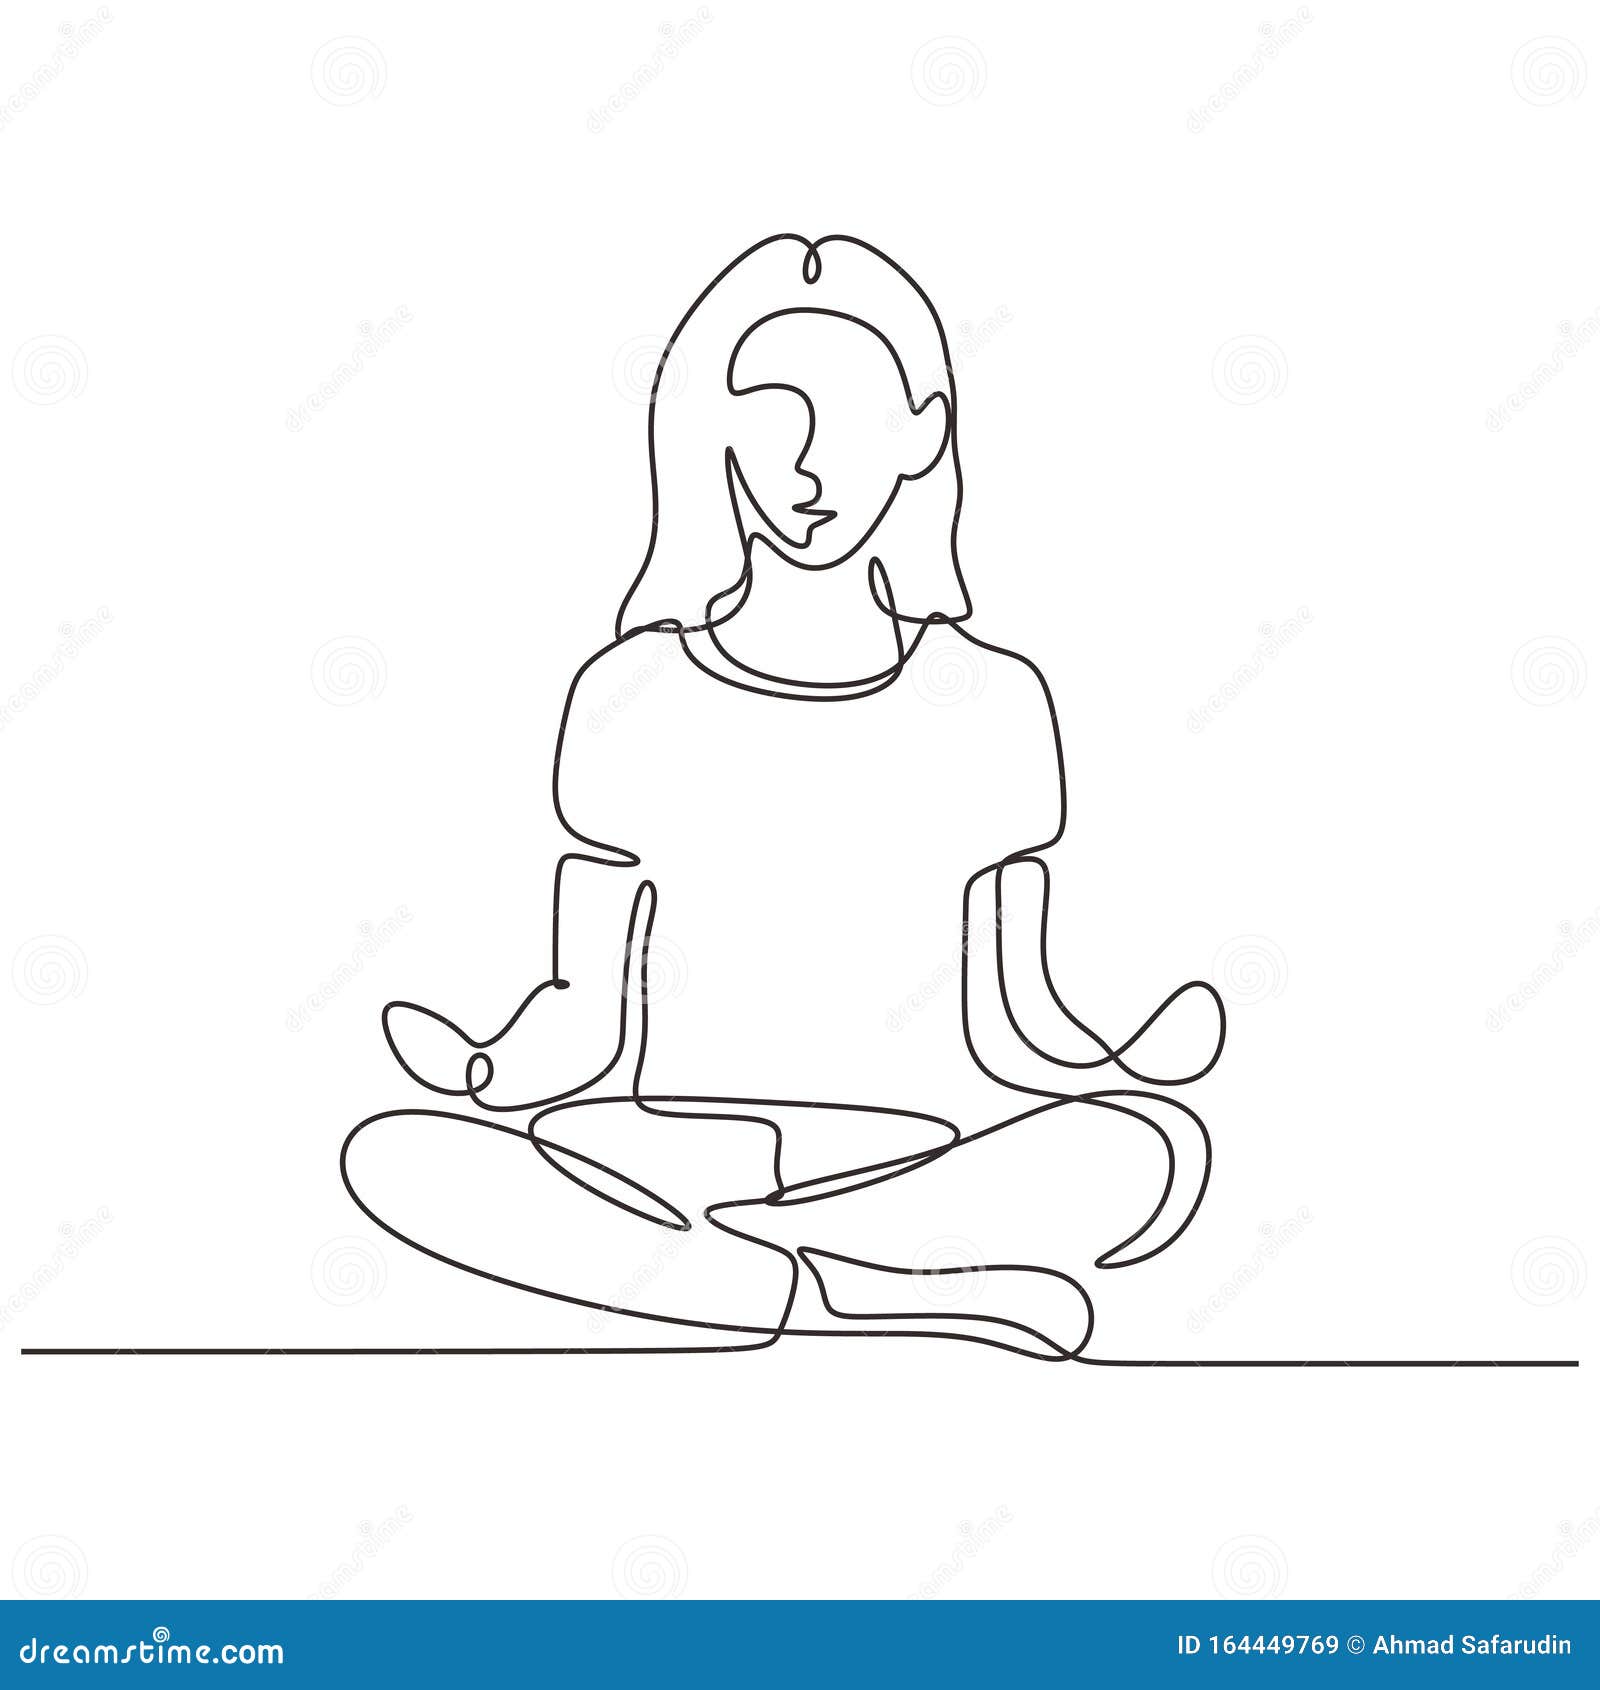 Sukhasa - pencil sketch of a girl sitting in yoga pose Art Print by  inspiredbyocean | Society6